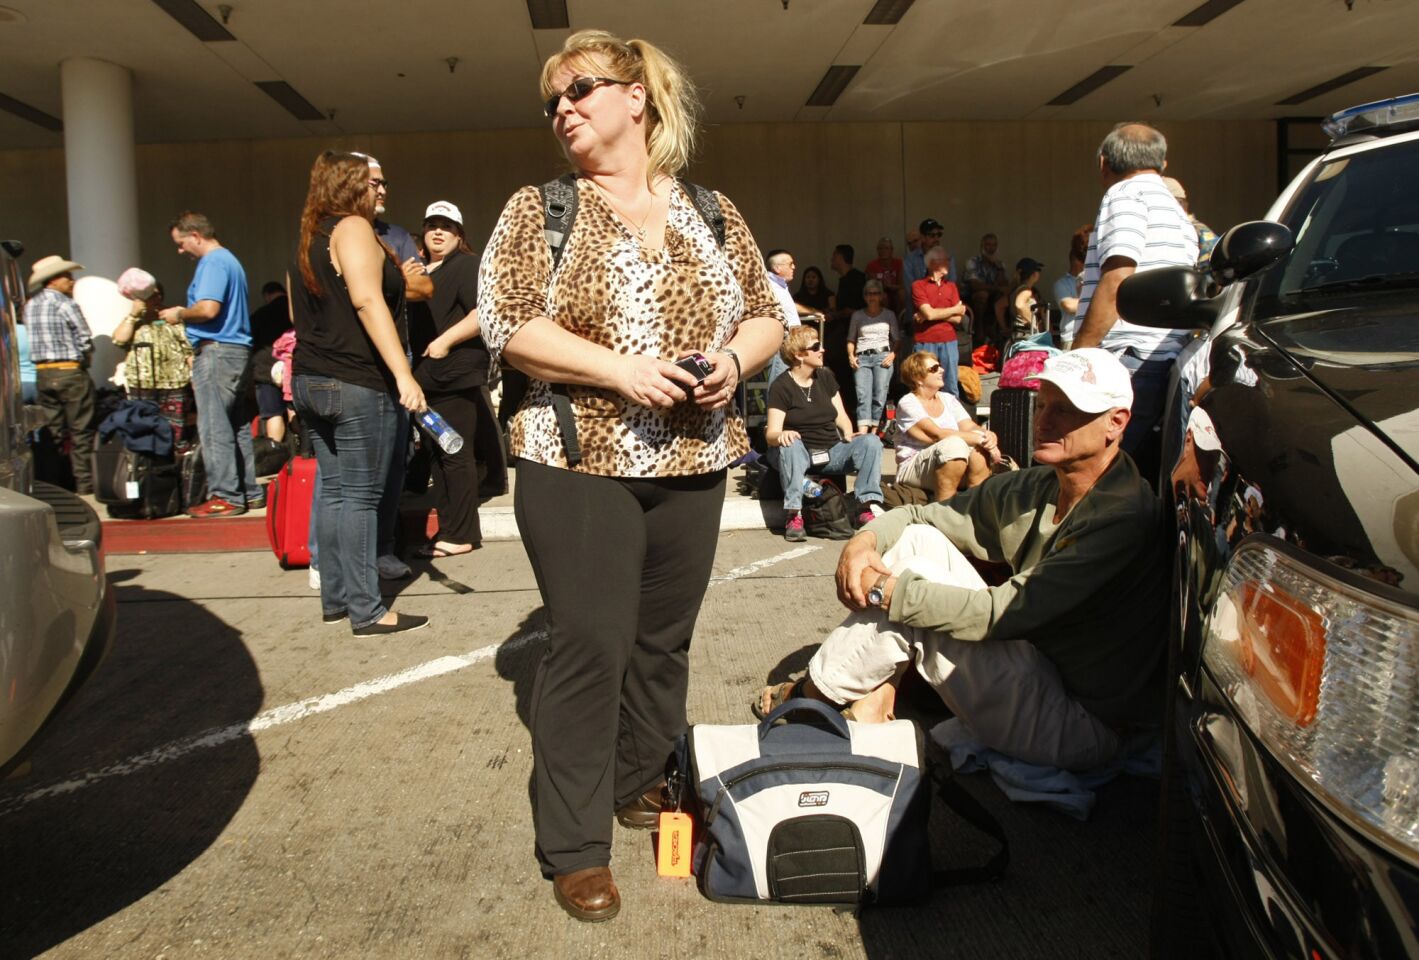 Passengers wait outside Terminal 1 at LAX.